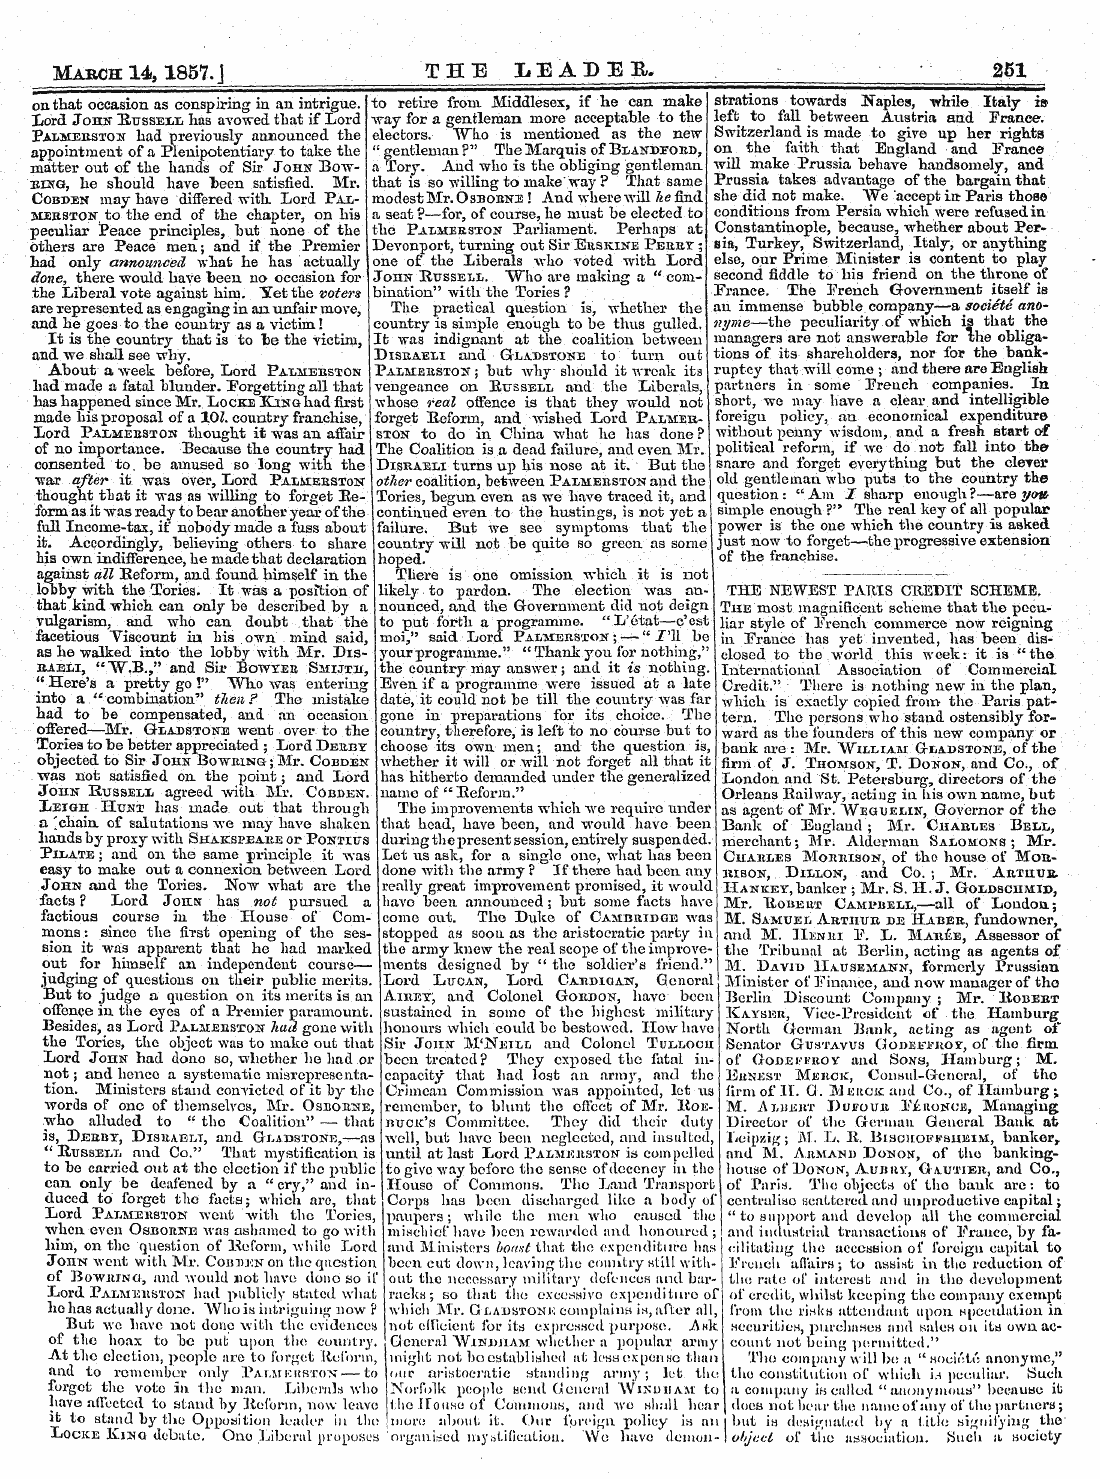 Leader (1850-1860): jS F Y, 2nd edition - March 14,1857.J. The Leader, 2 Gjl-